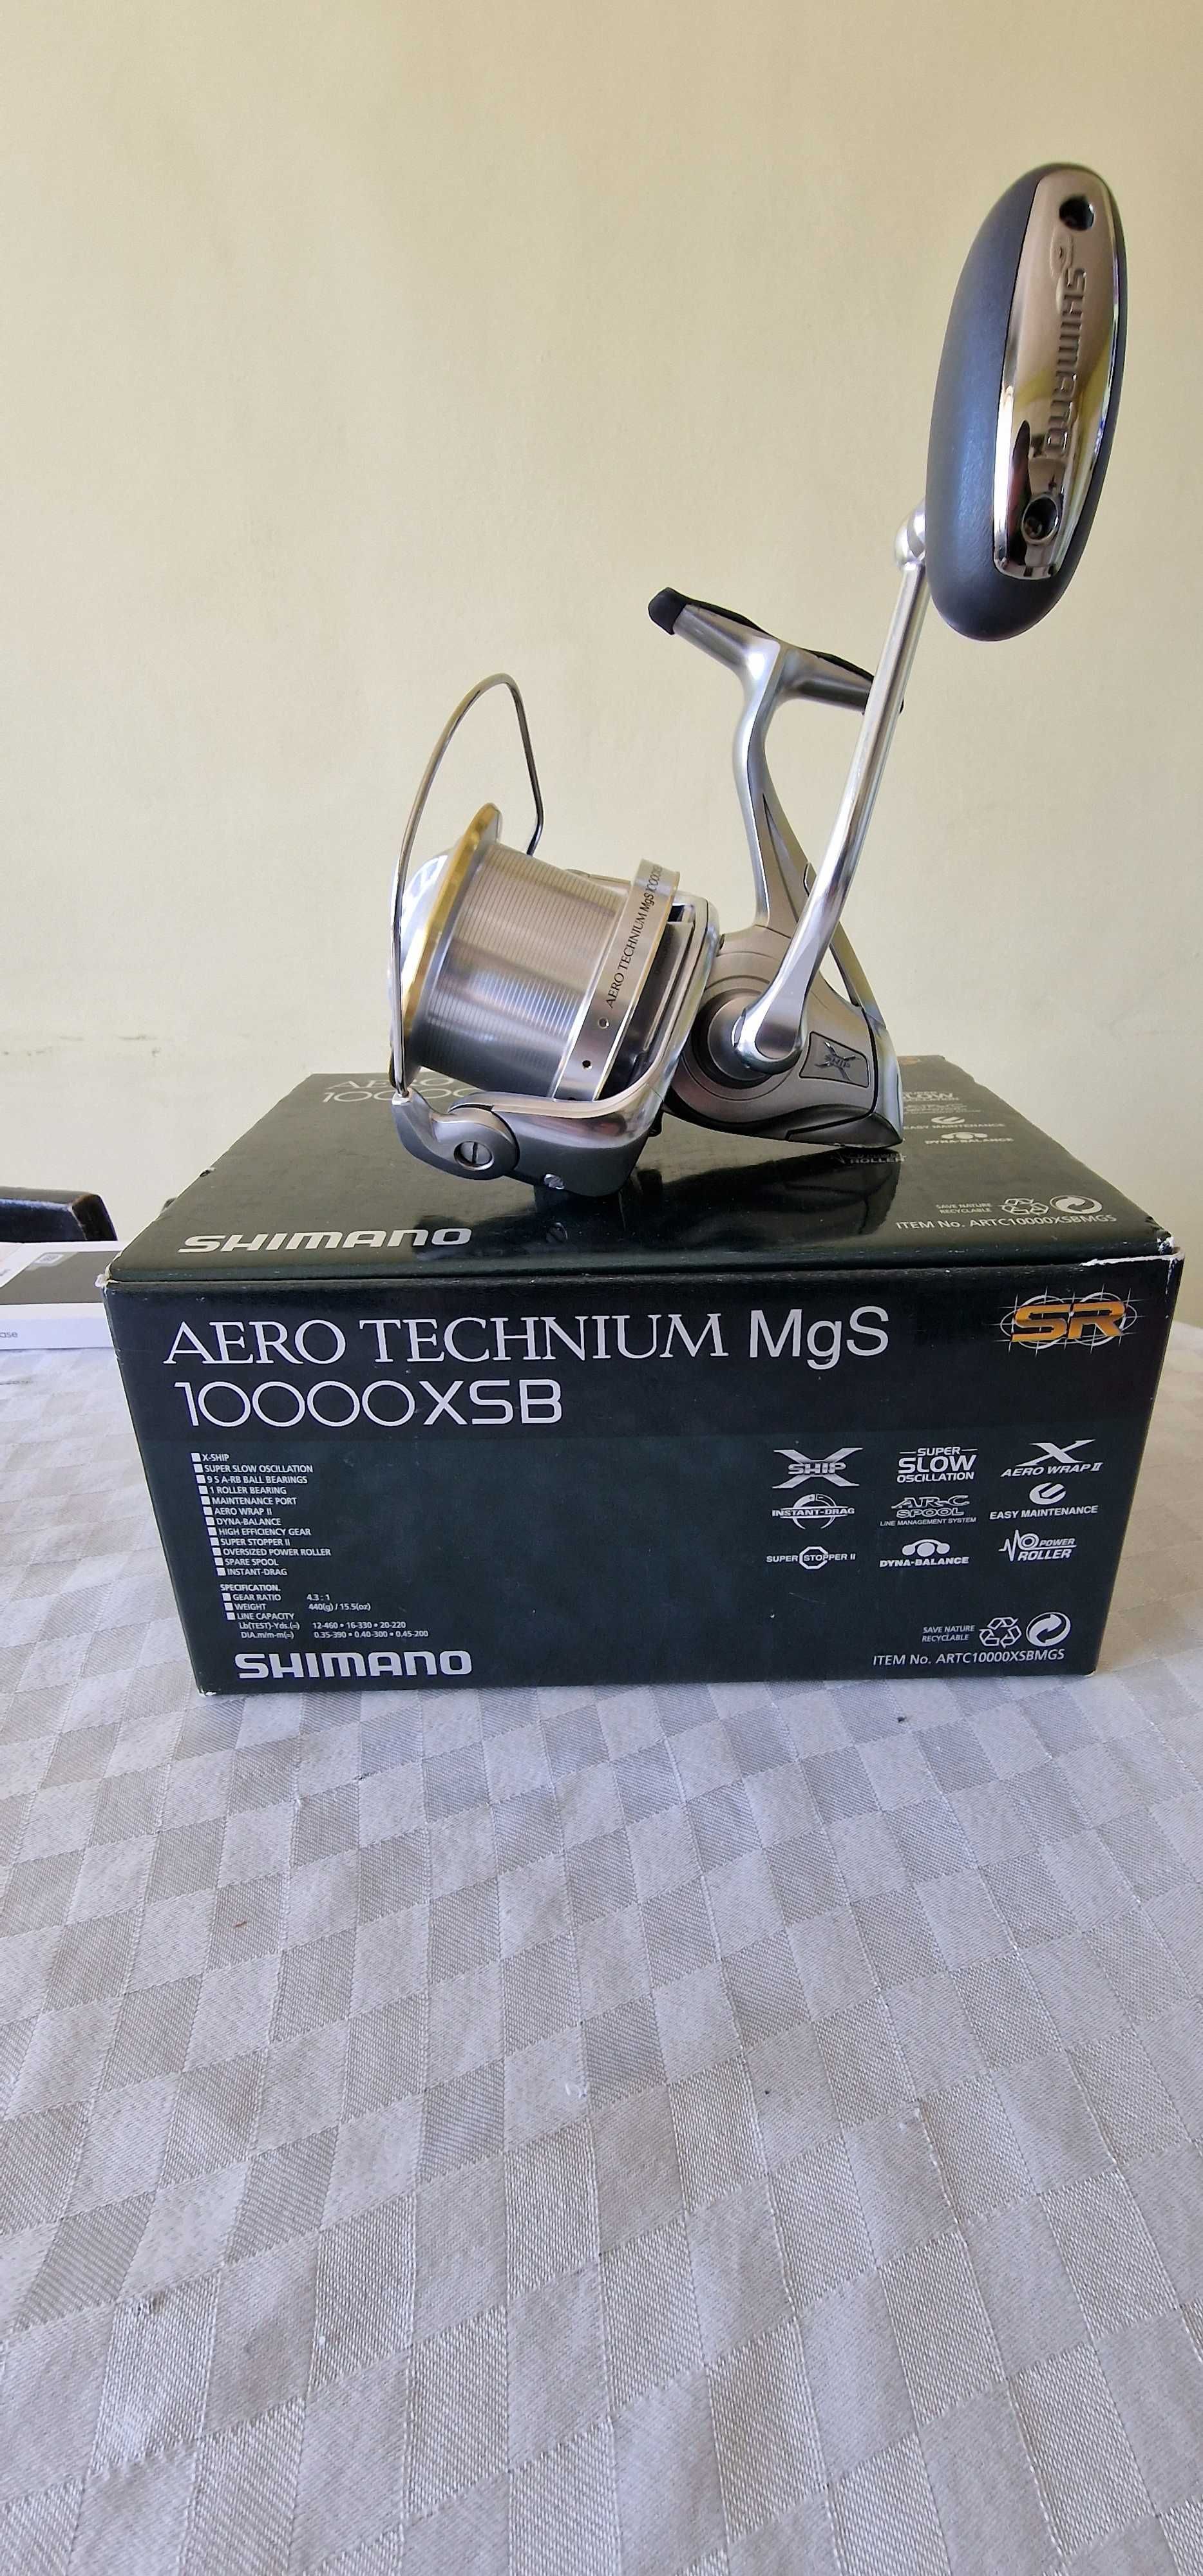 Shimano aero technium  MgS XSB 10000